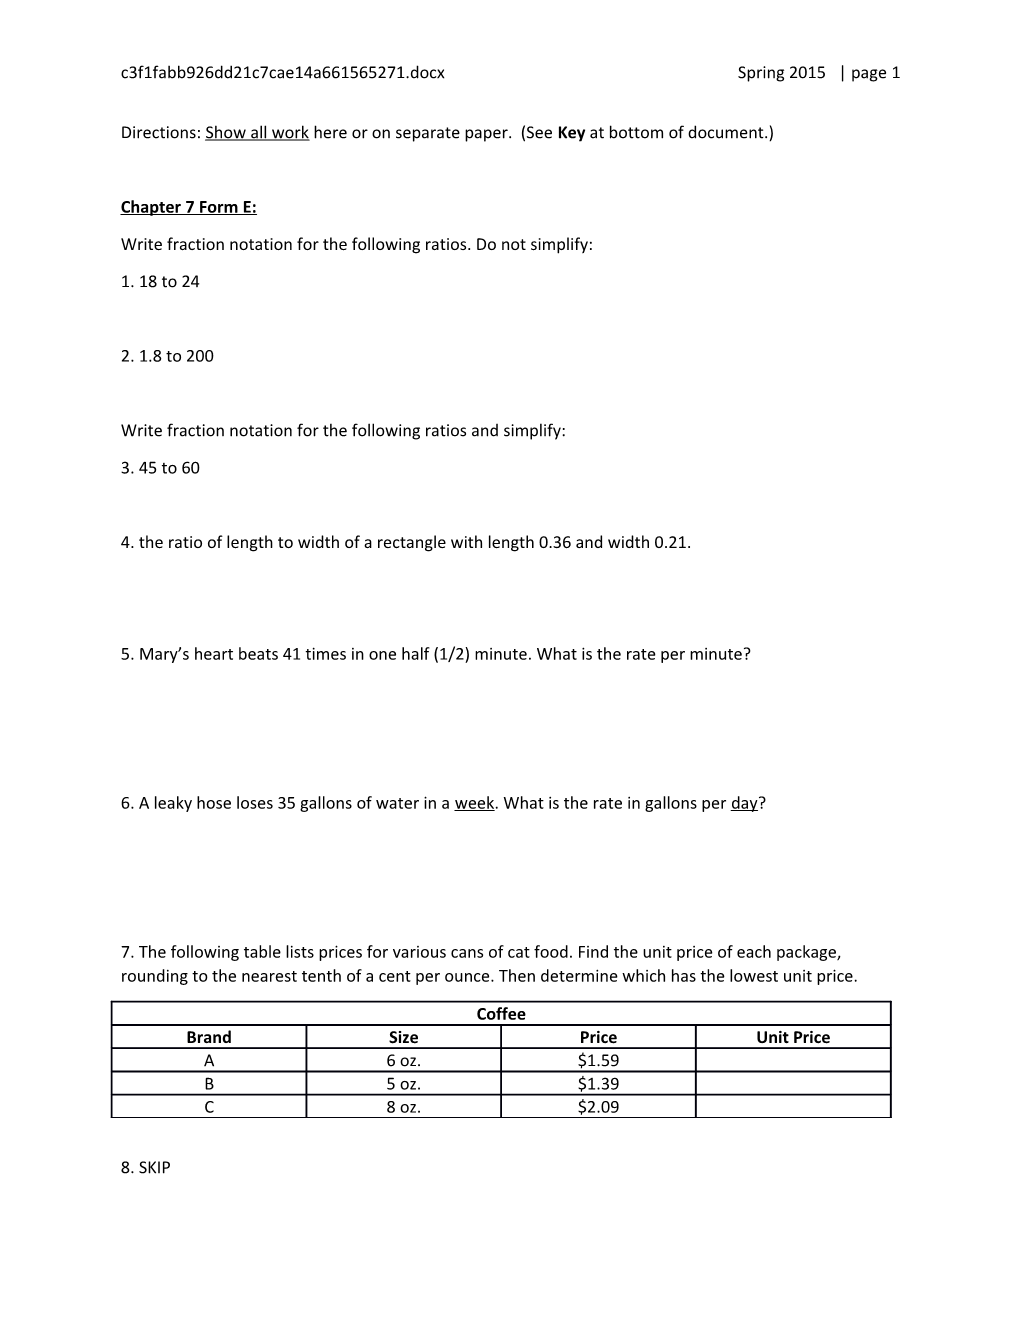 Test Ch07 Practice W Keyforme Sp15 Spring 2015 Page 1